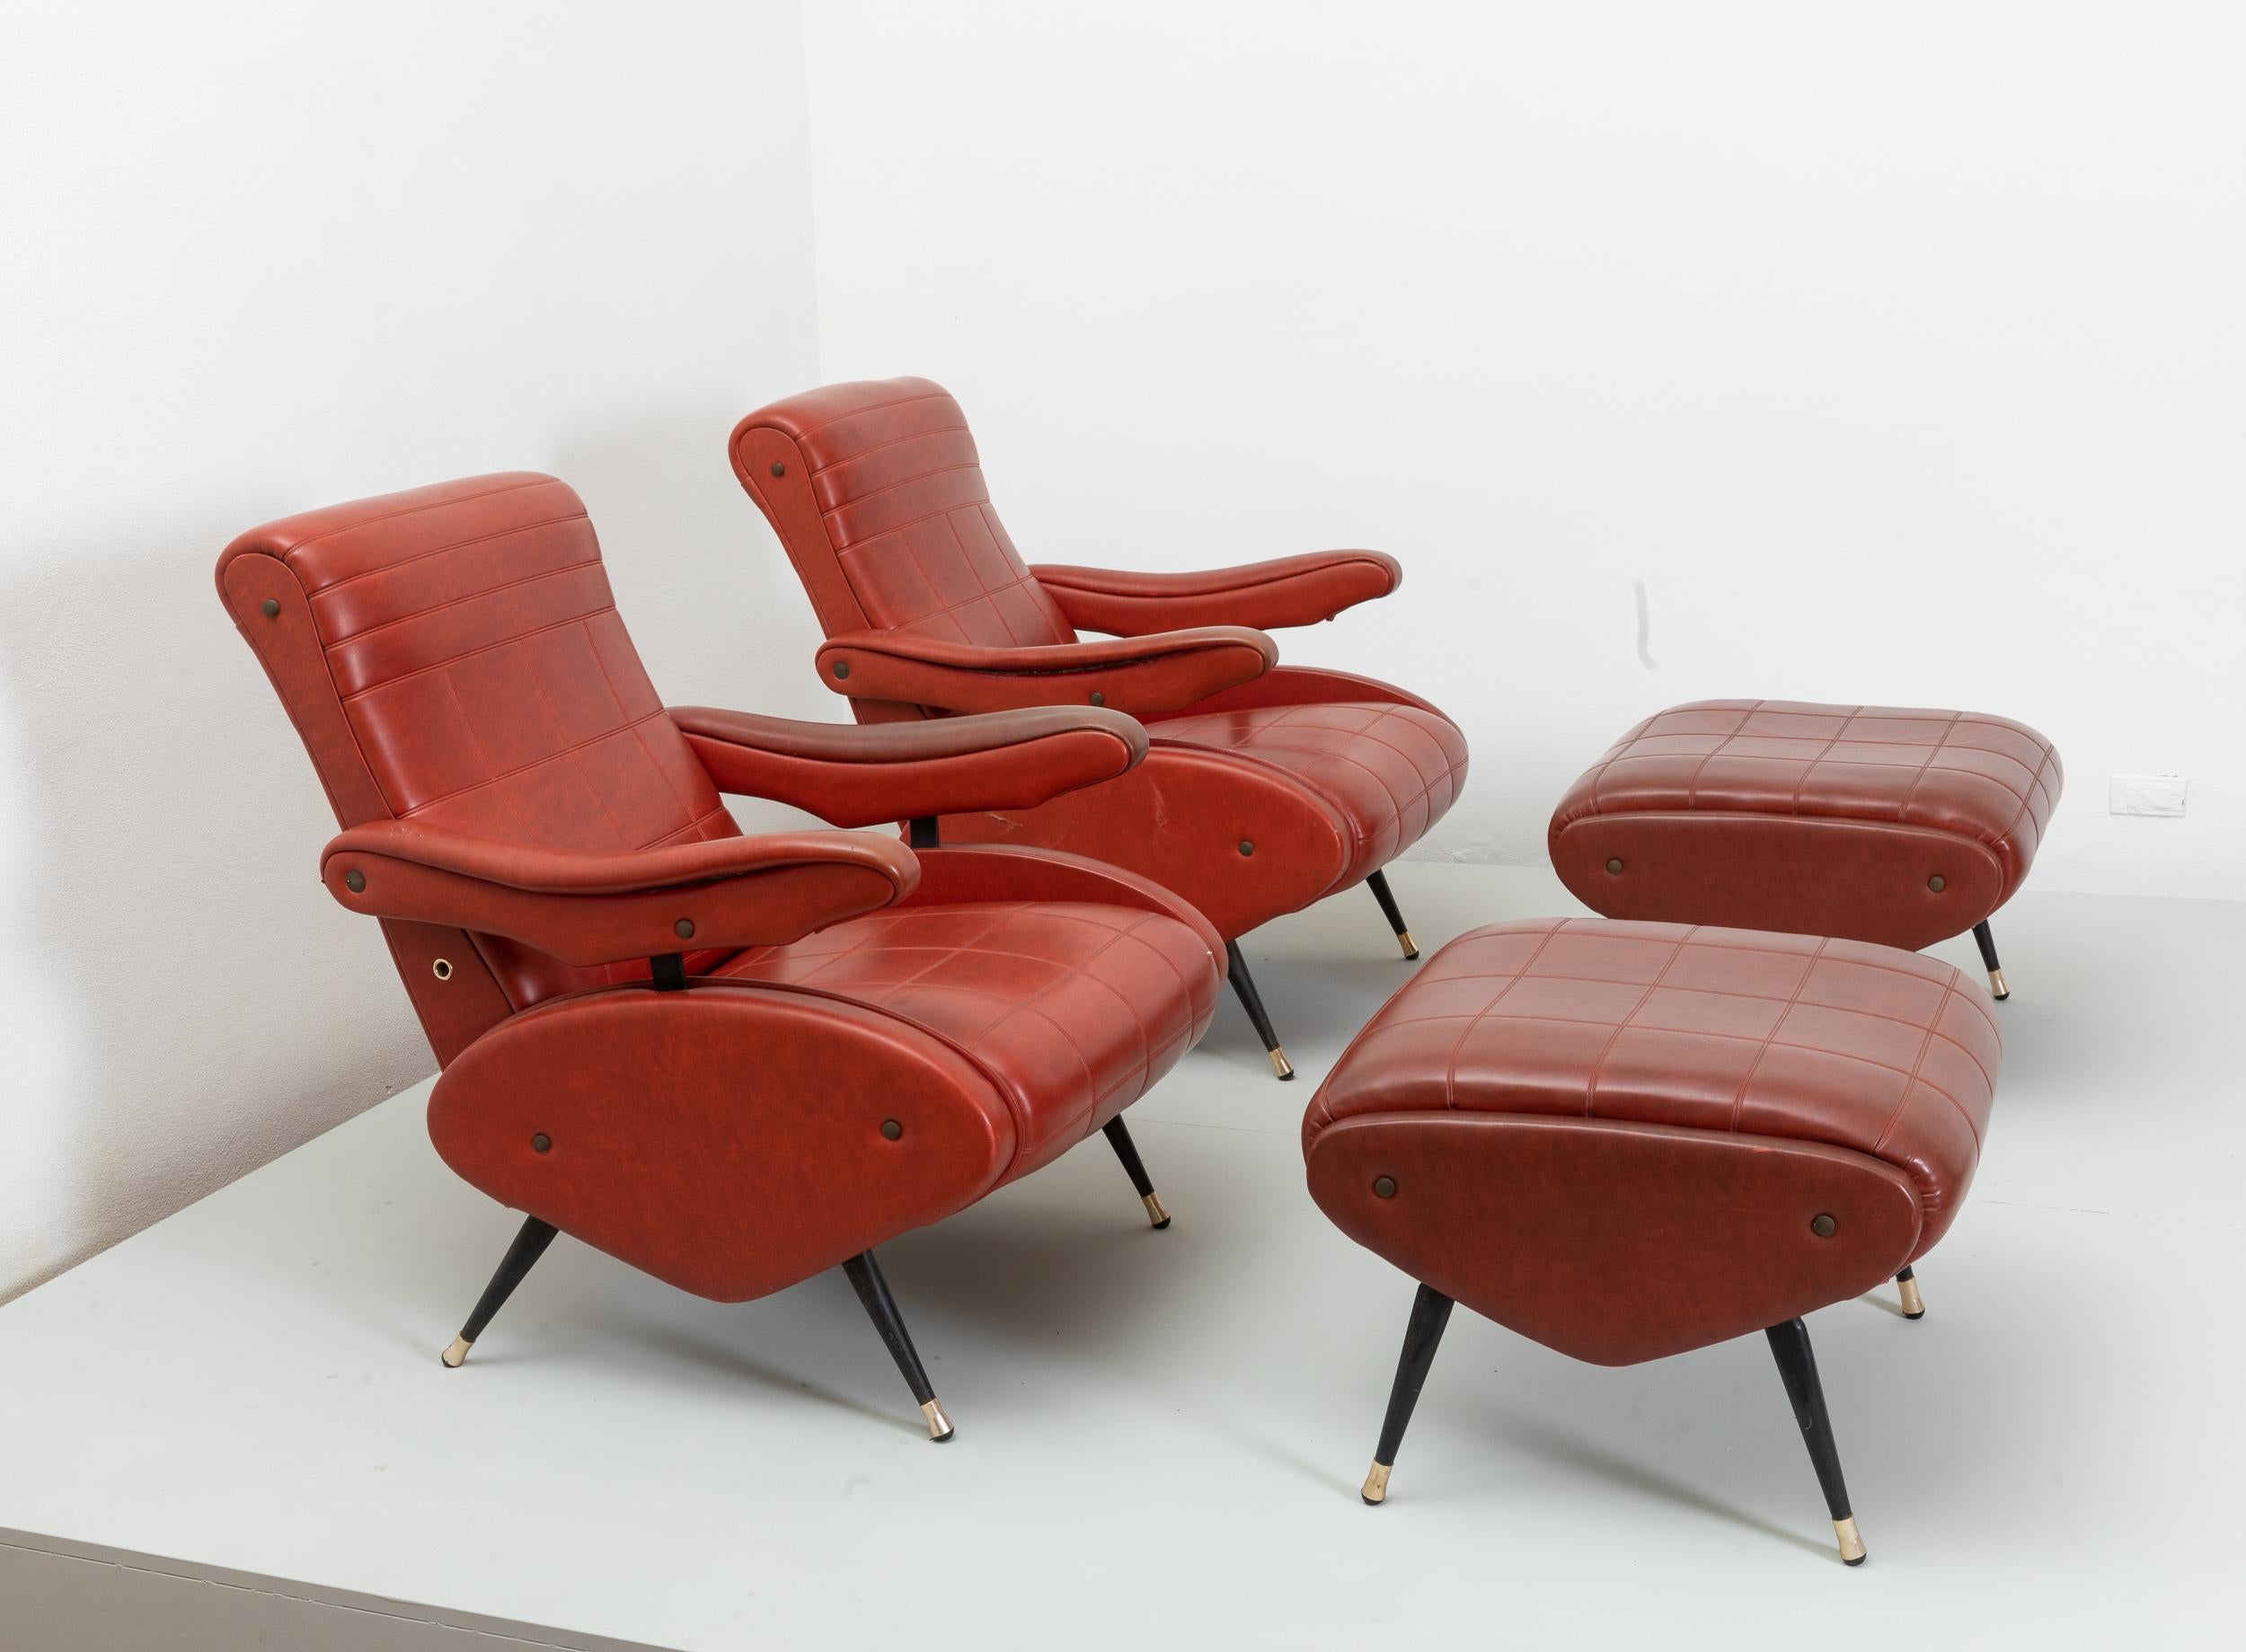 Nello Pini Prod. Novarredo c. 1950-1960 Two reclining armchairs and two pouffs 7